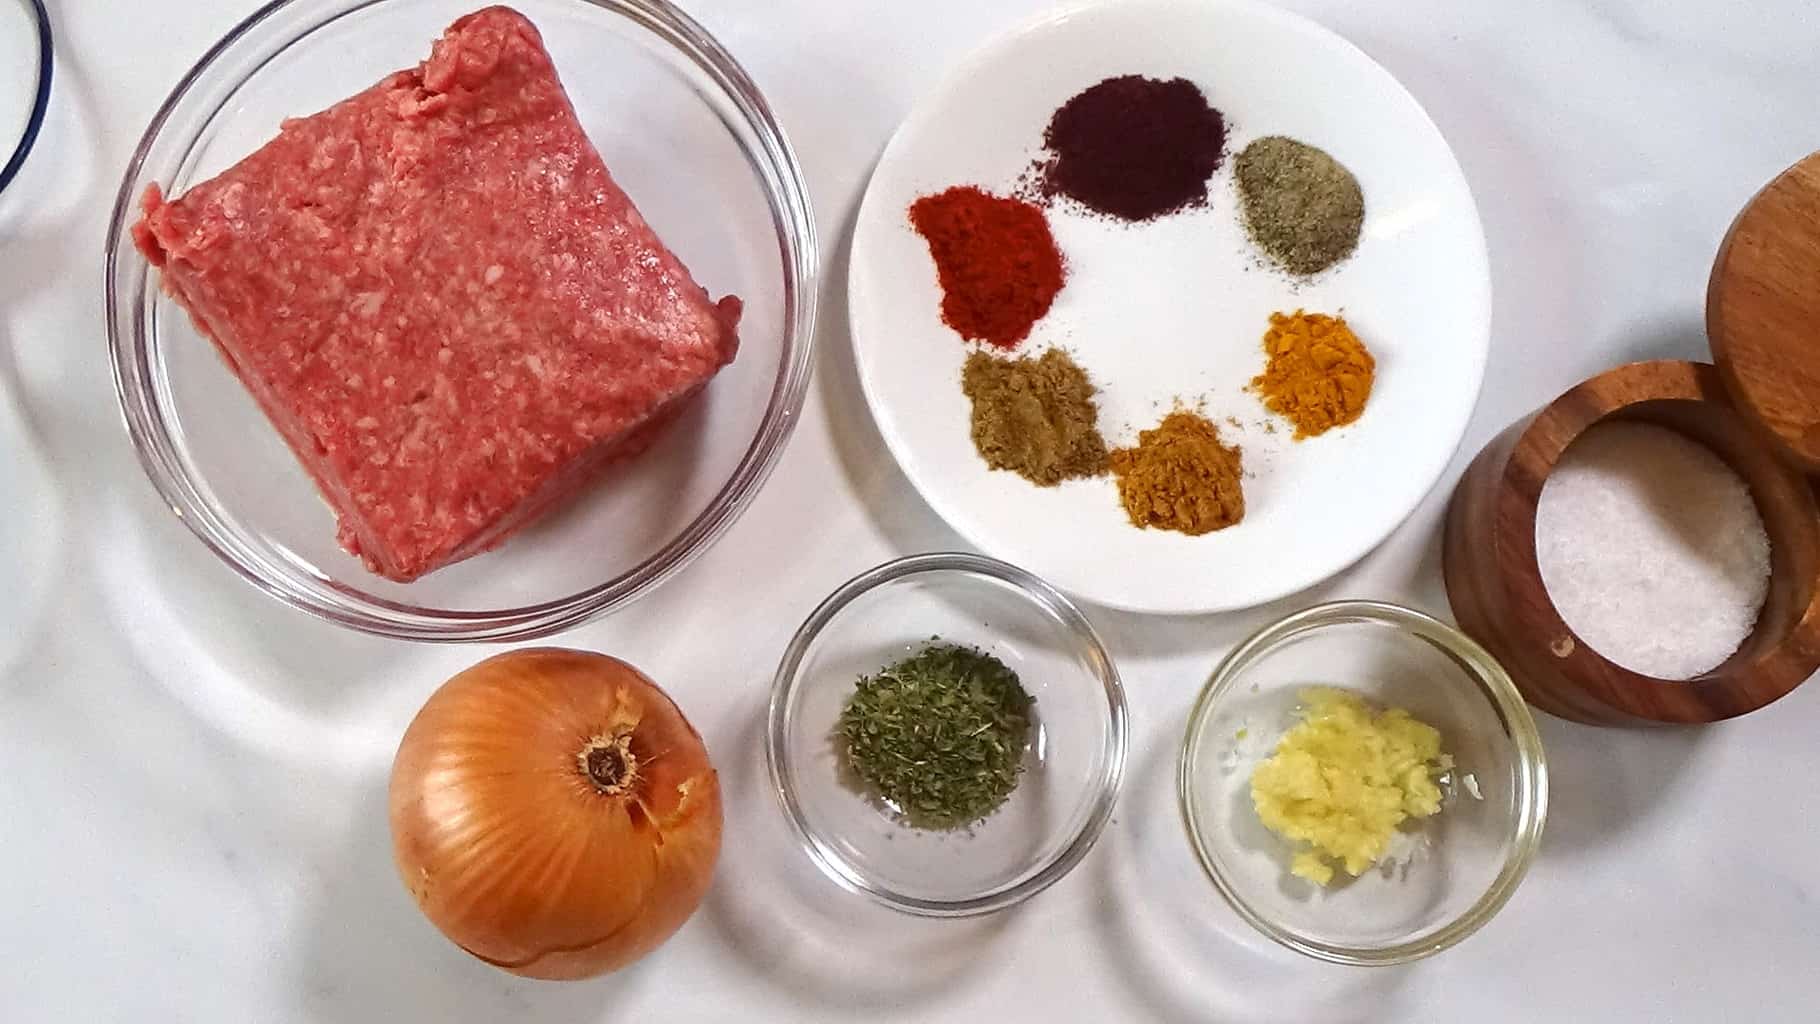 Ingredients for making Persian kabobs.